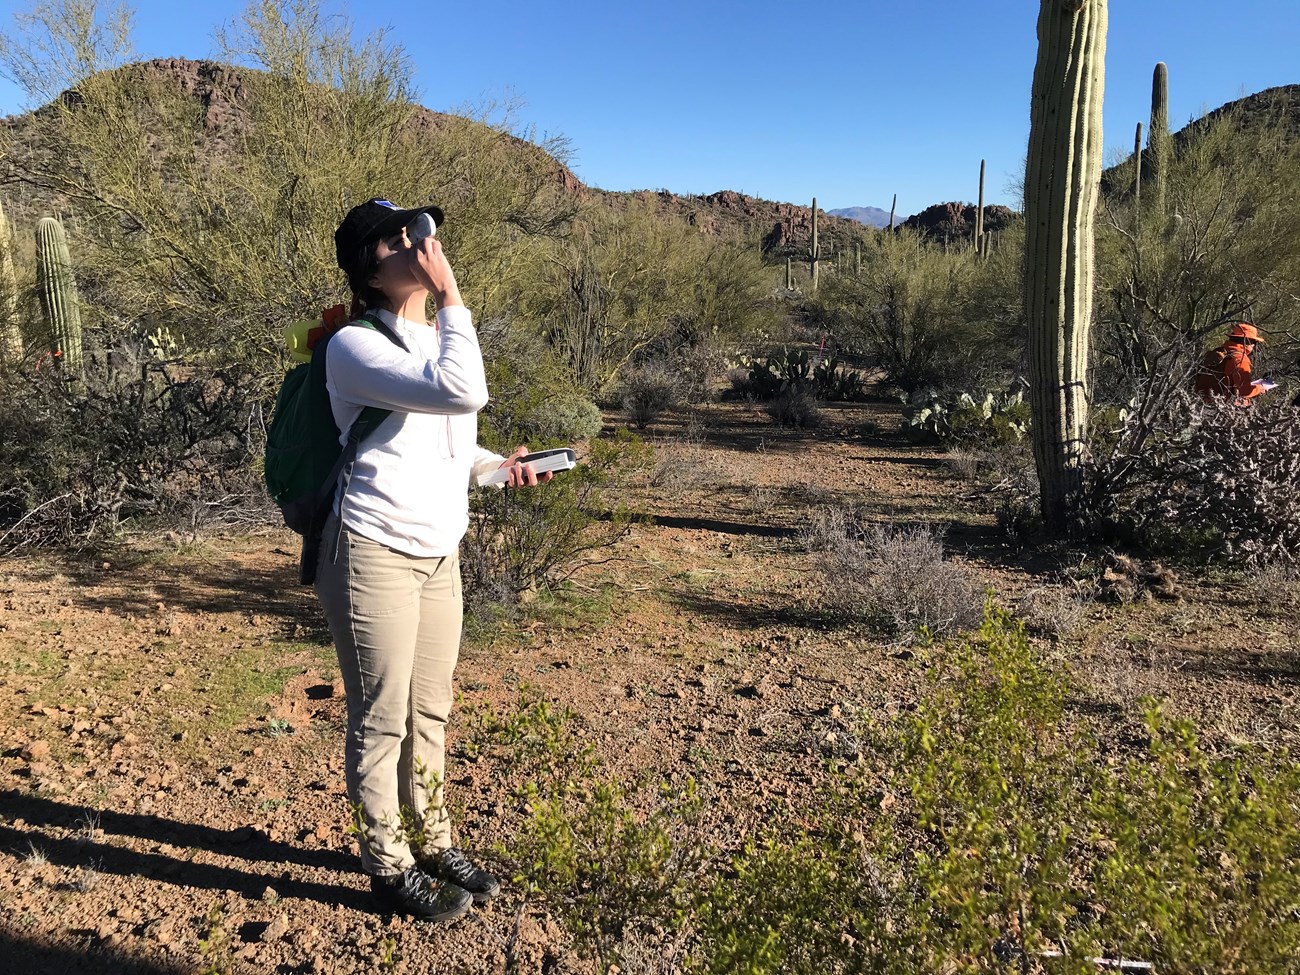 Volunteer uses cliometer to measure saguaro